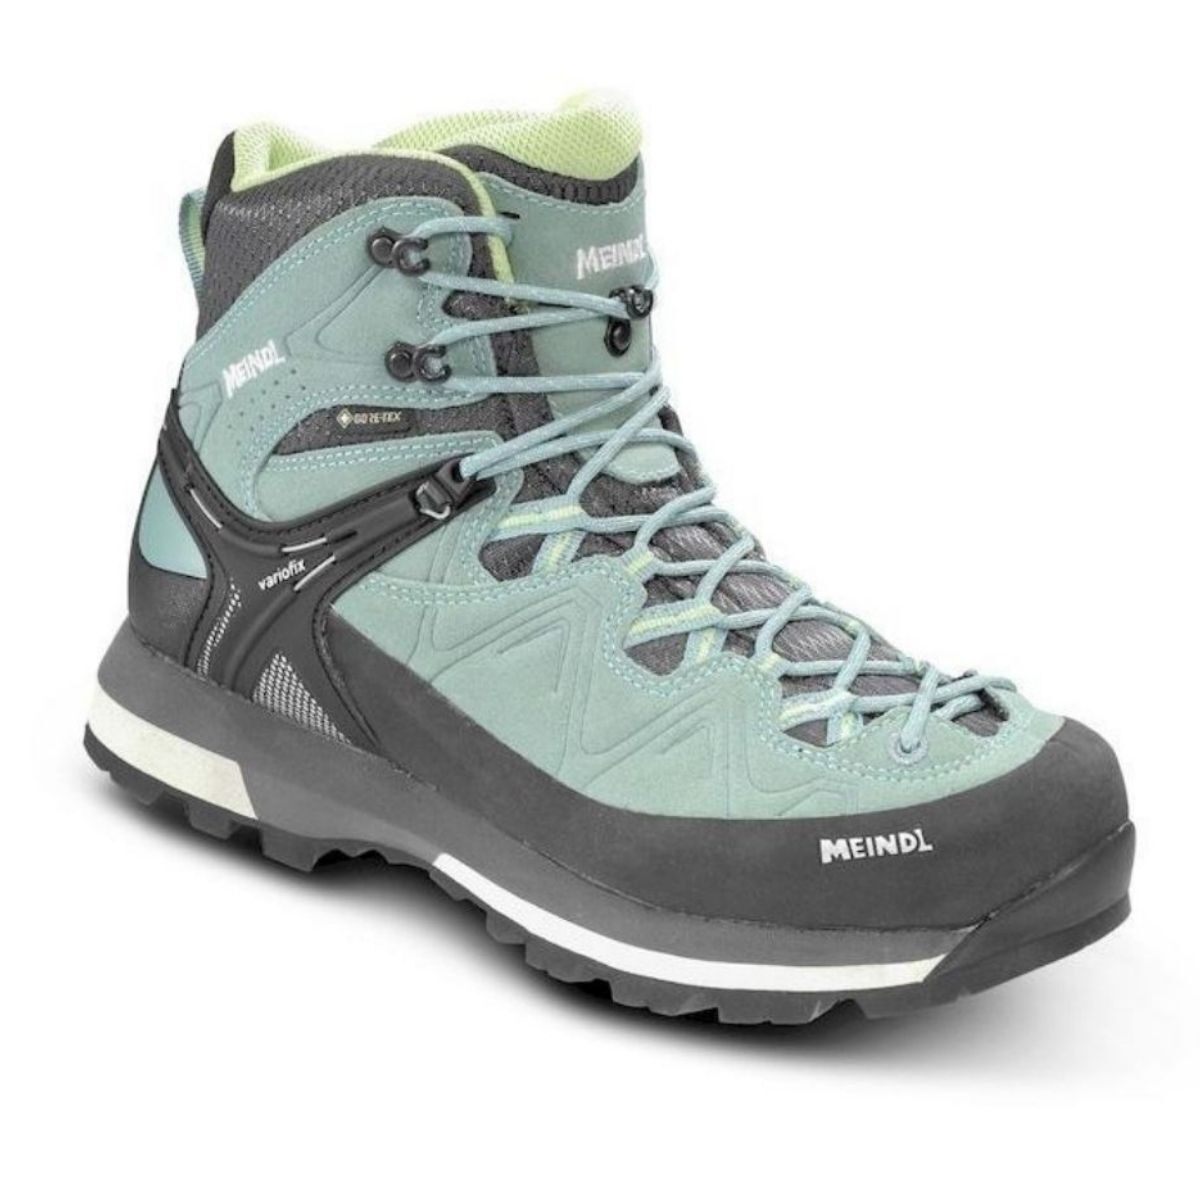 Meindl Tonale Lady GTX - Hiking shoes - Women's